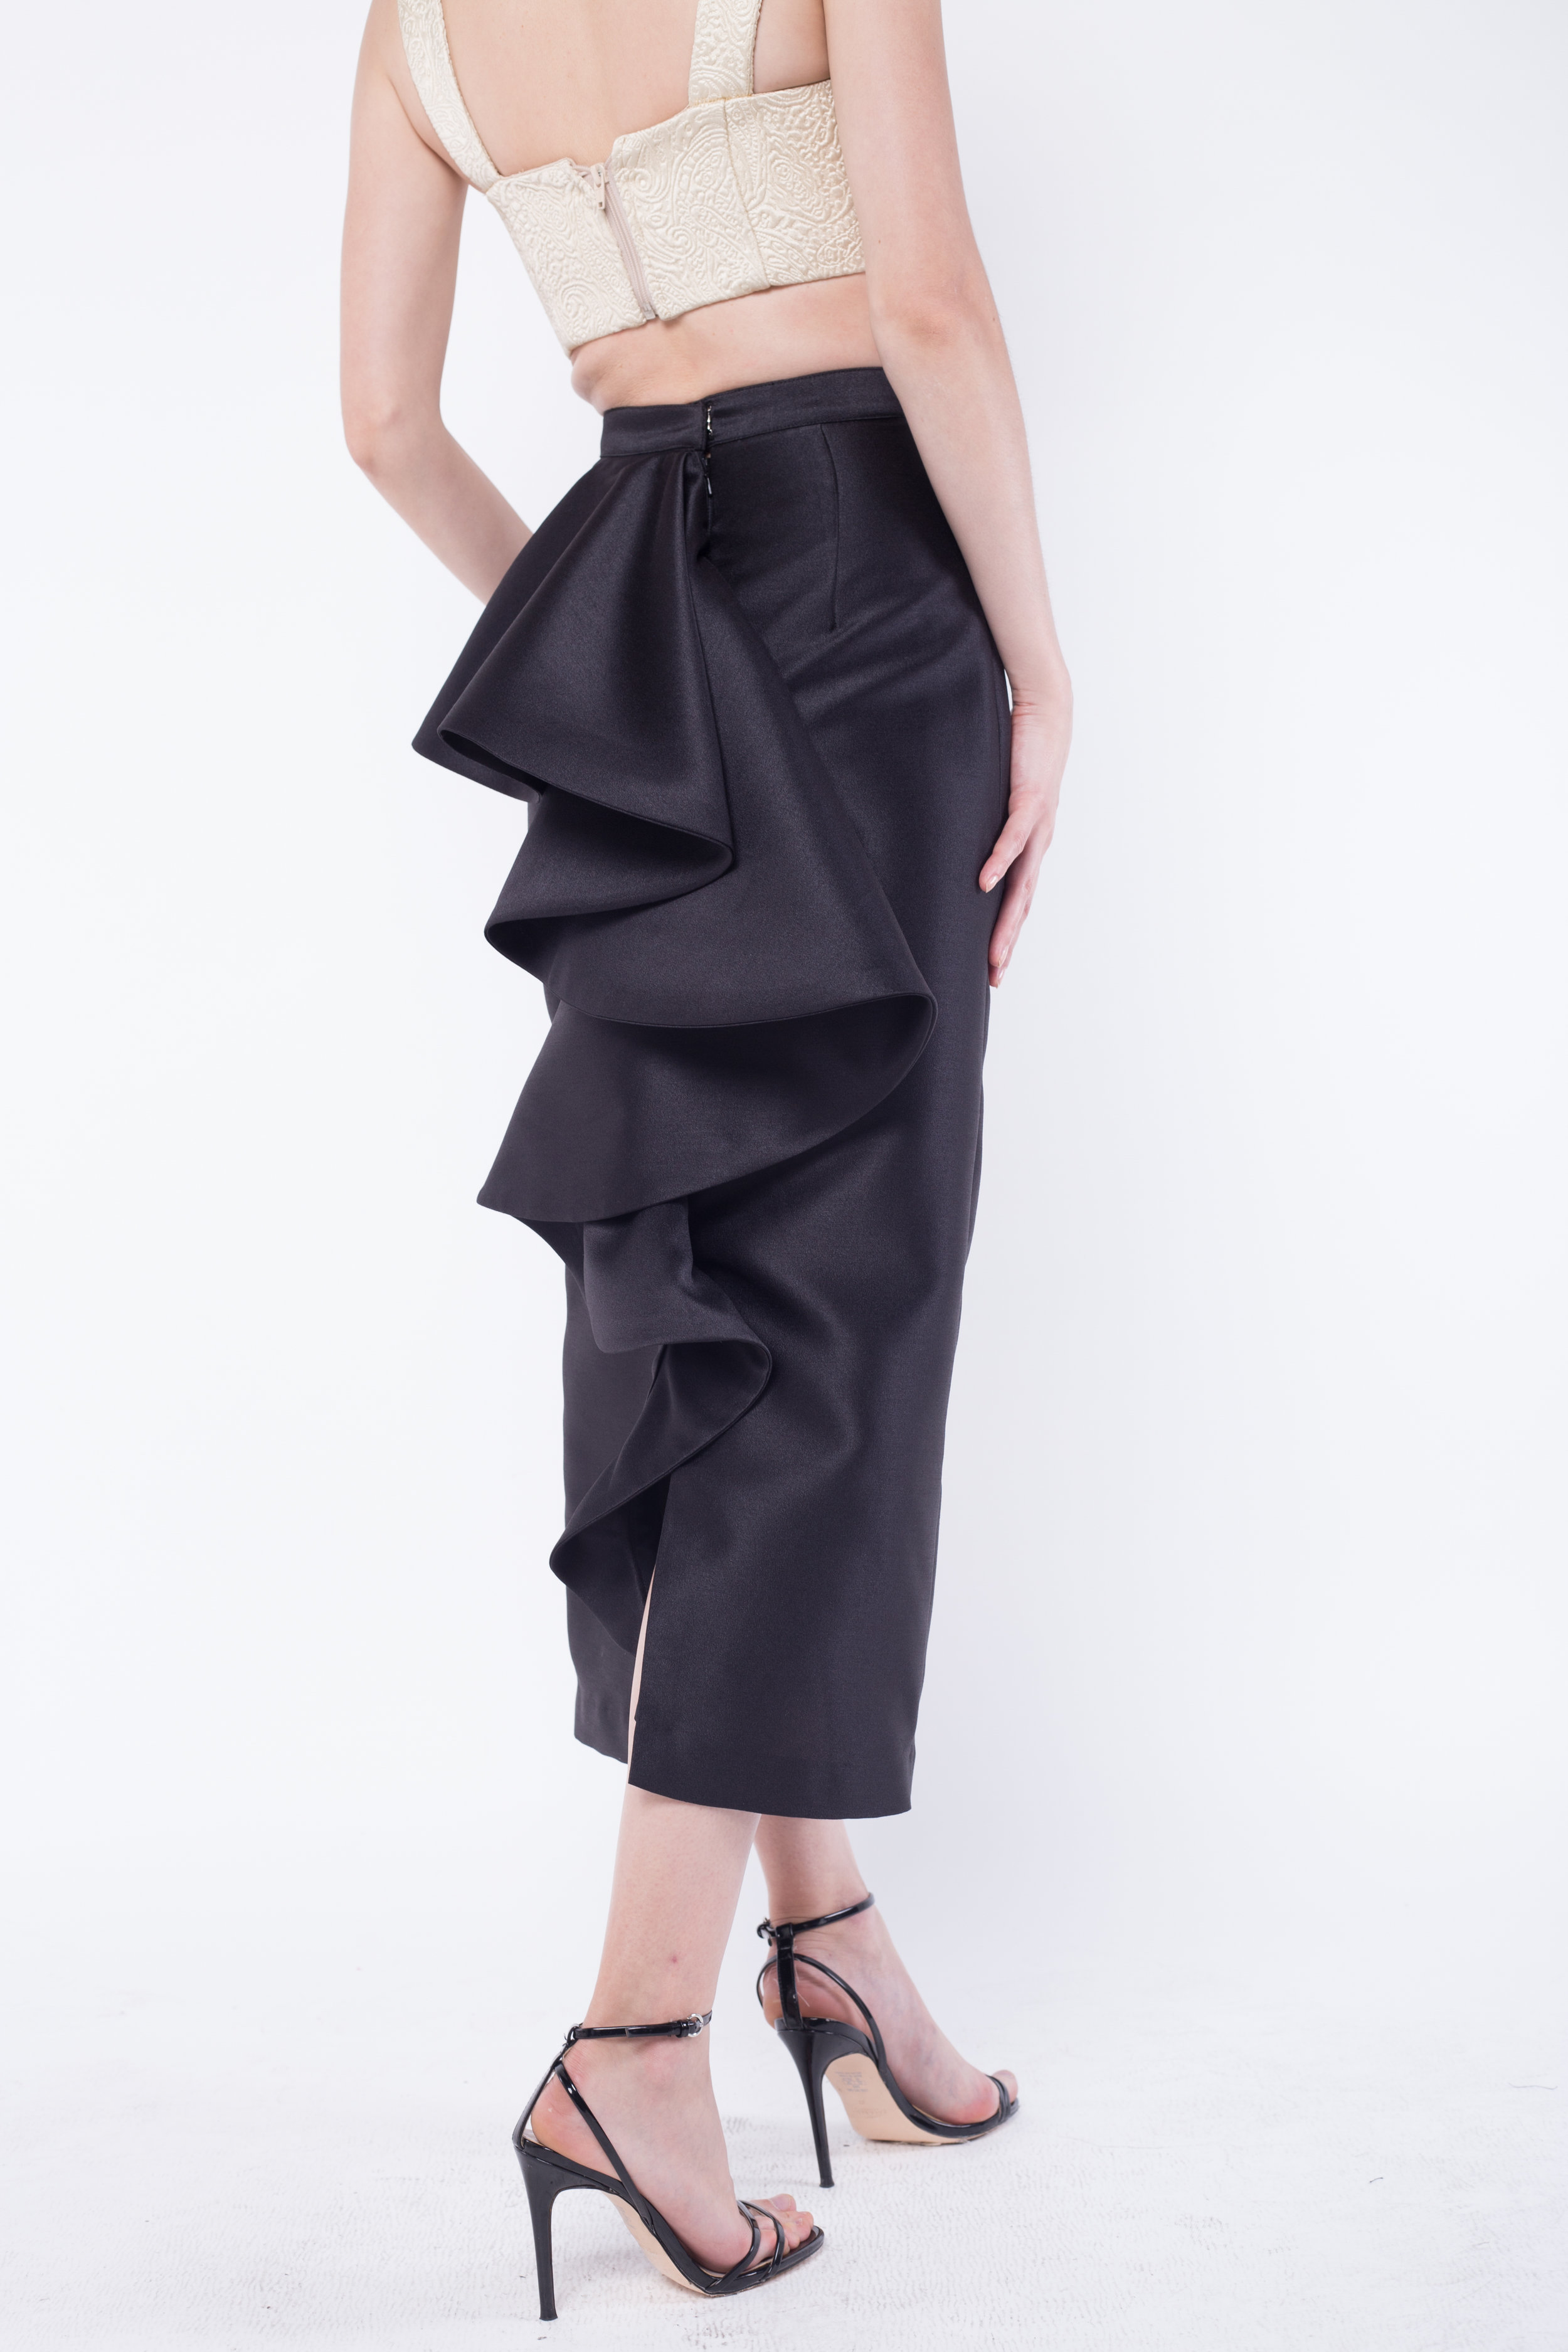 MARIKIT - Marikit Araviso - Women's Designer Clothing-Luxury Ready-to ...